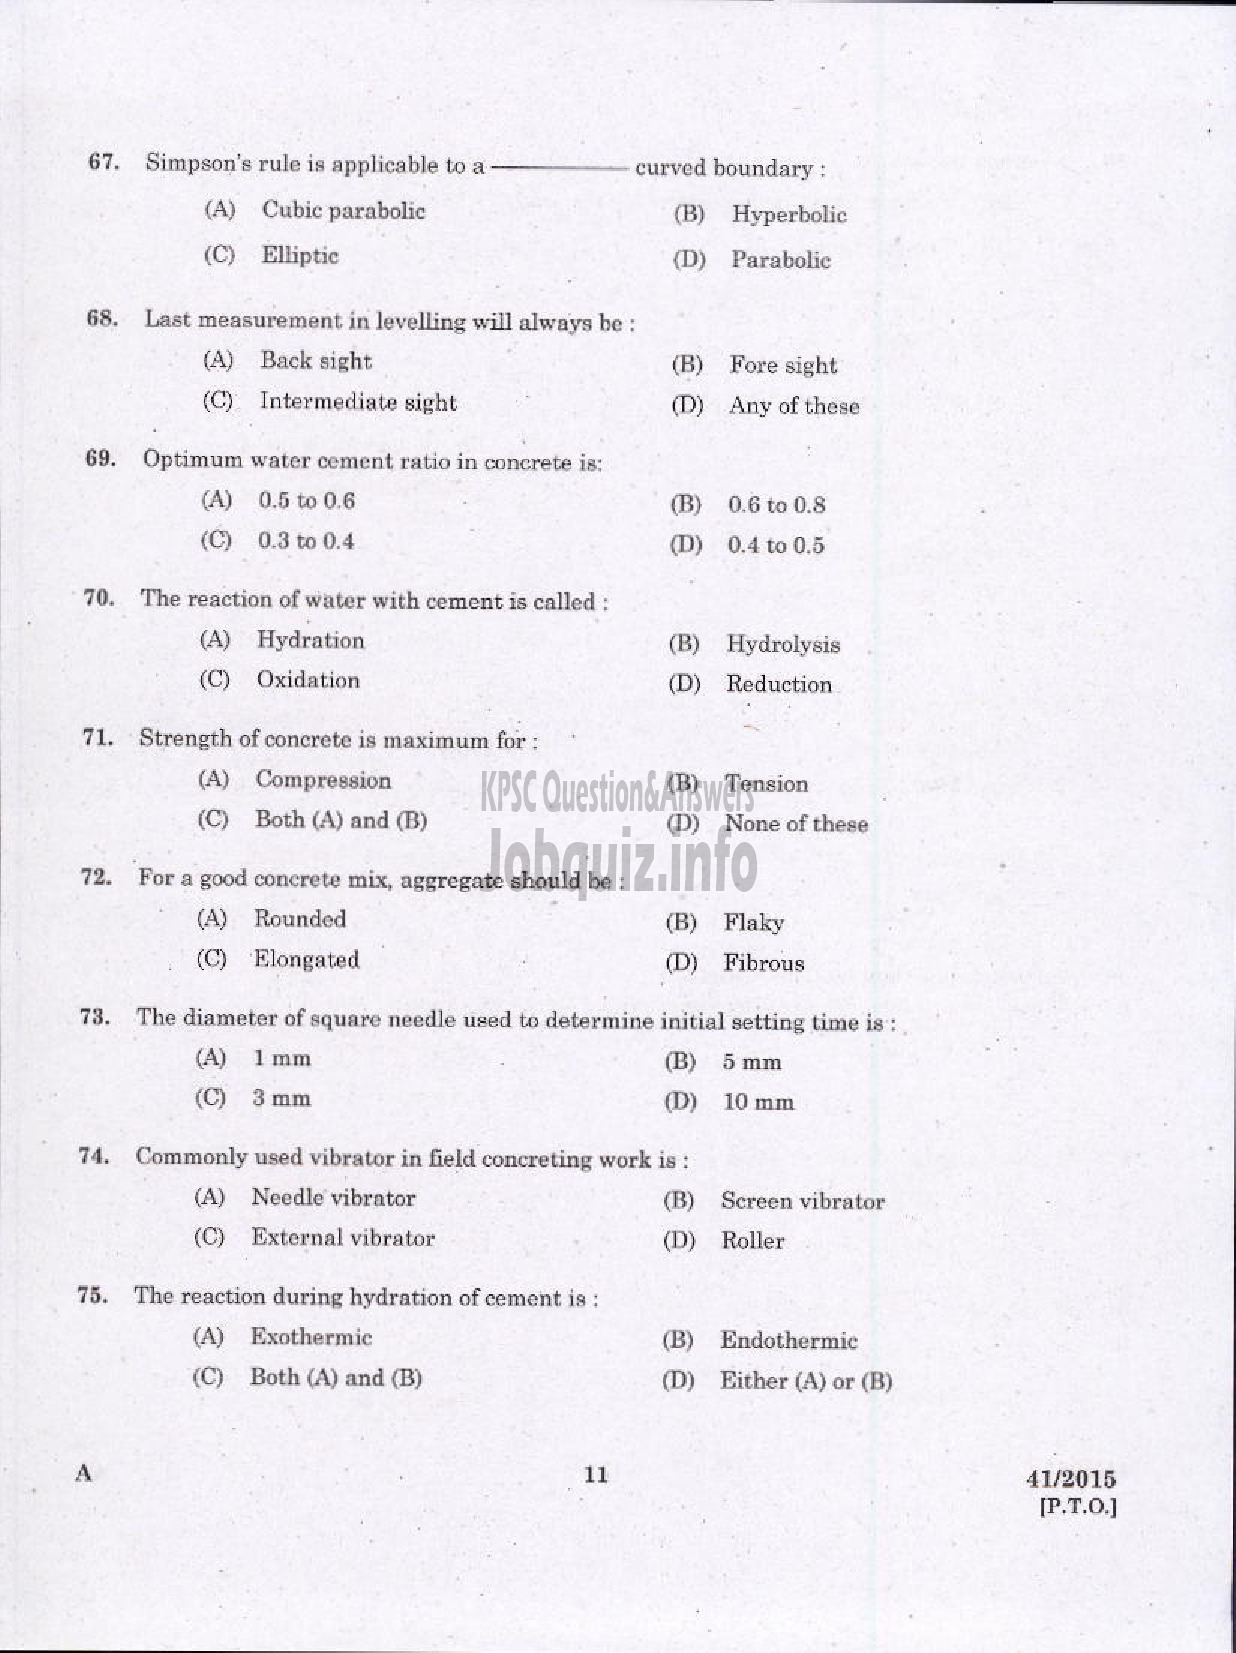 Kerala PSC Question Paper - LABORATORY TECHNICAL ASSISTANT CIVIL CONSTRUCTION AND MAINTENANCE VOCATIONAL HIGHER SECONDARY EDUCATION-9